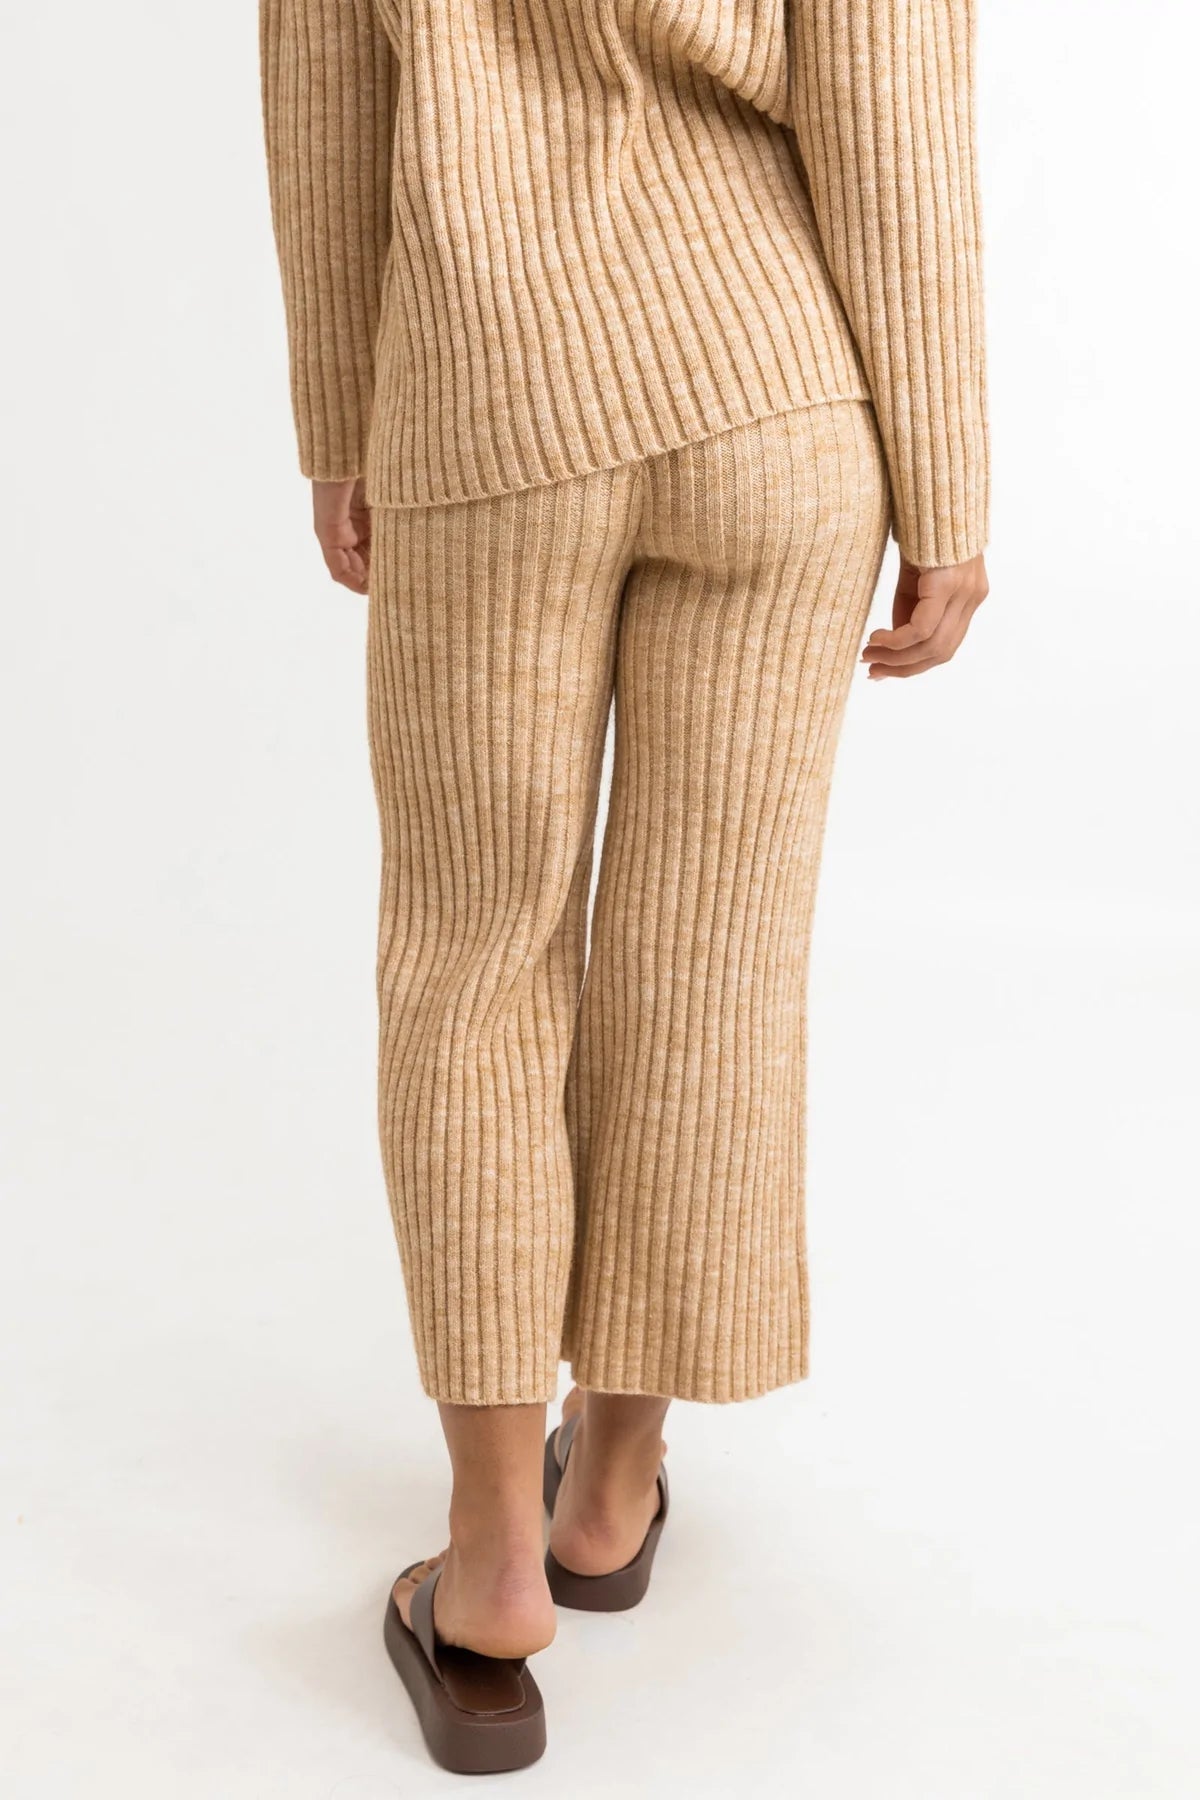 RHYTHM Women's Daisy Knit Pant Oatmeal Women's Pants Rhythm 